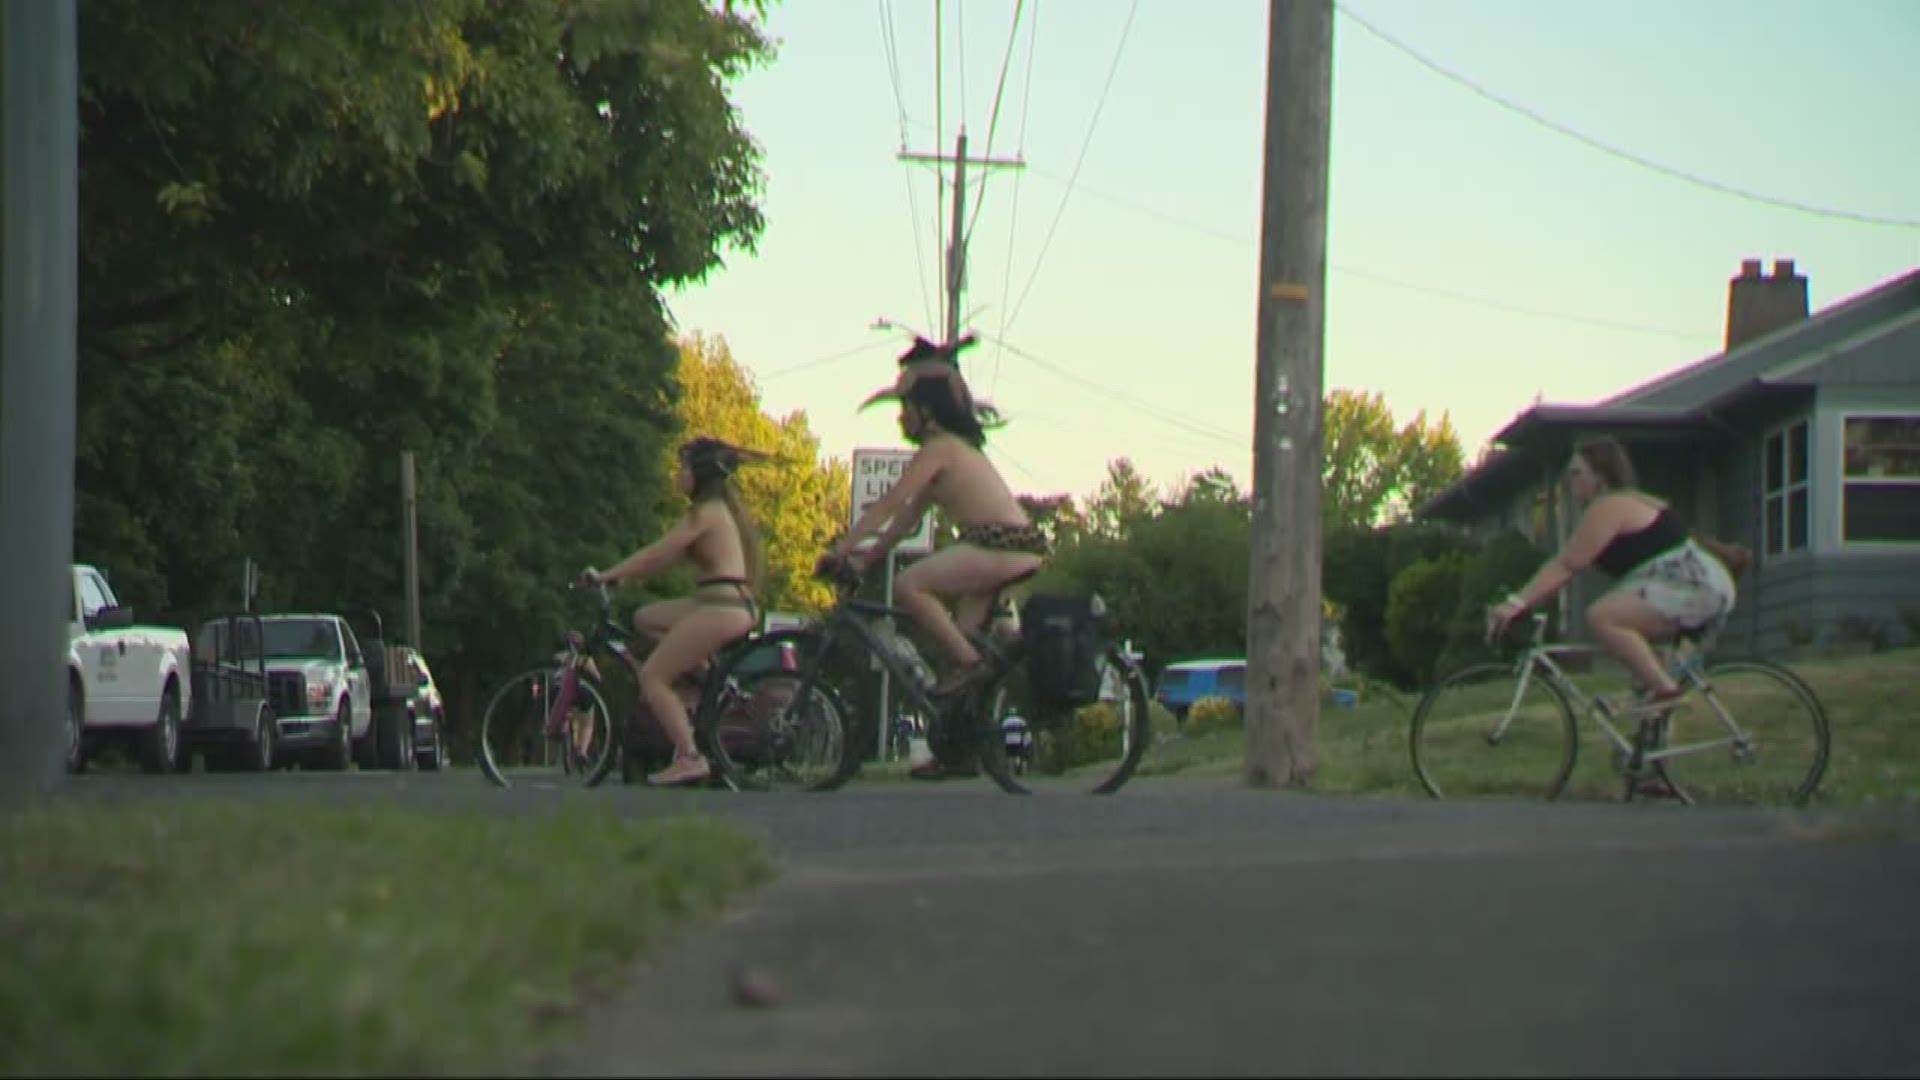 darrell mckinstry add photo naked bike ride in portland